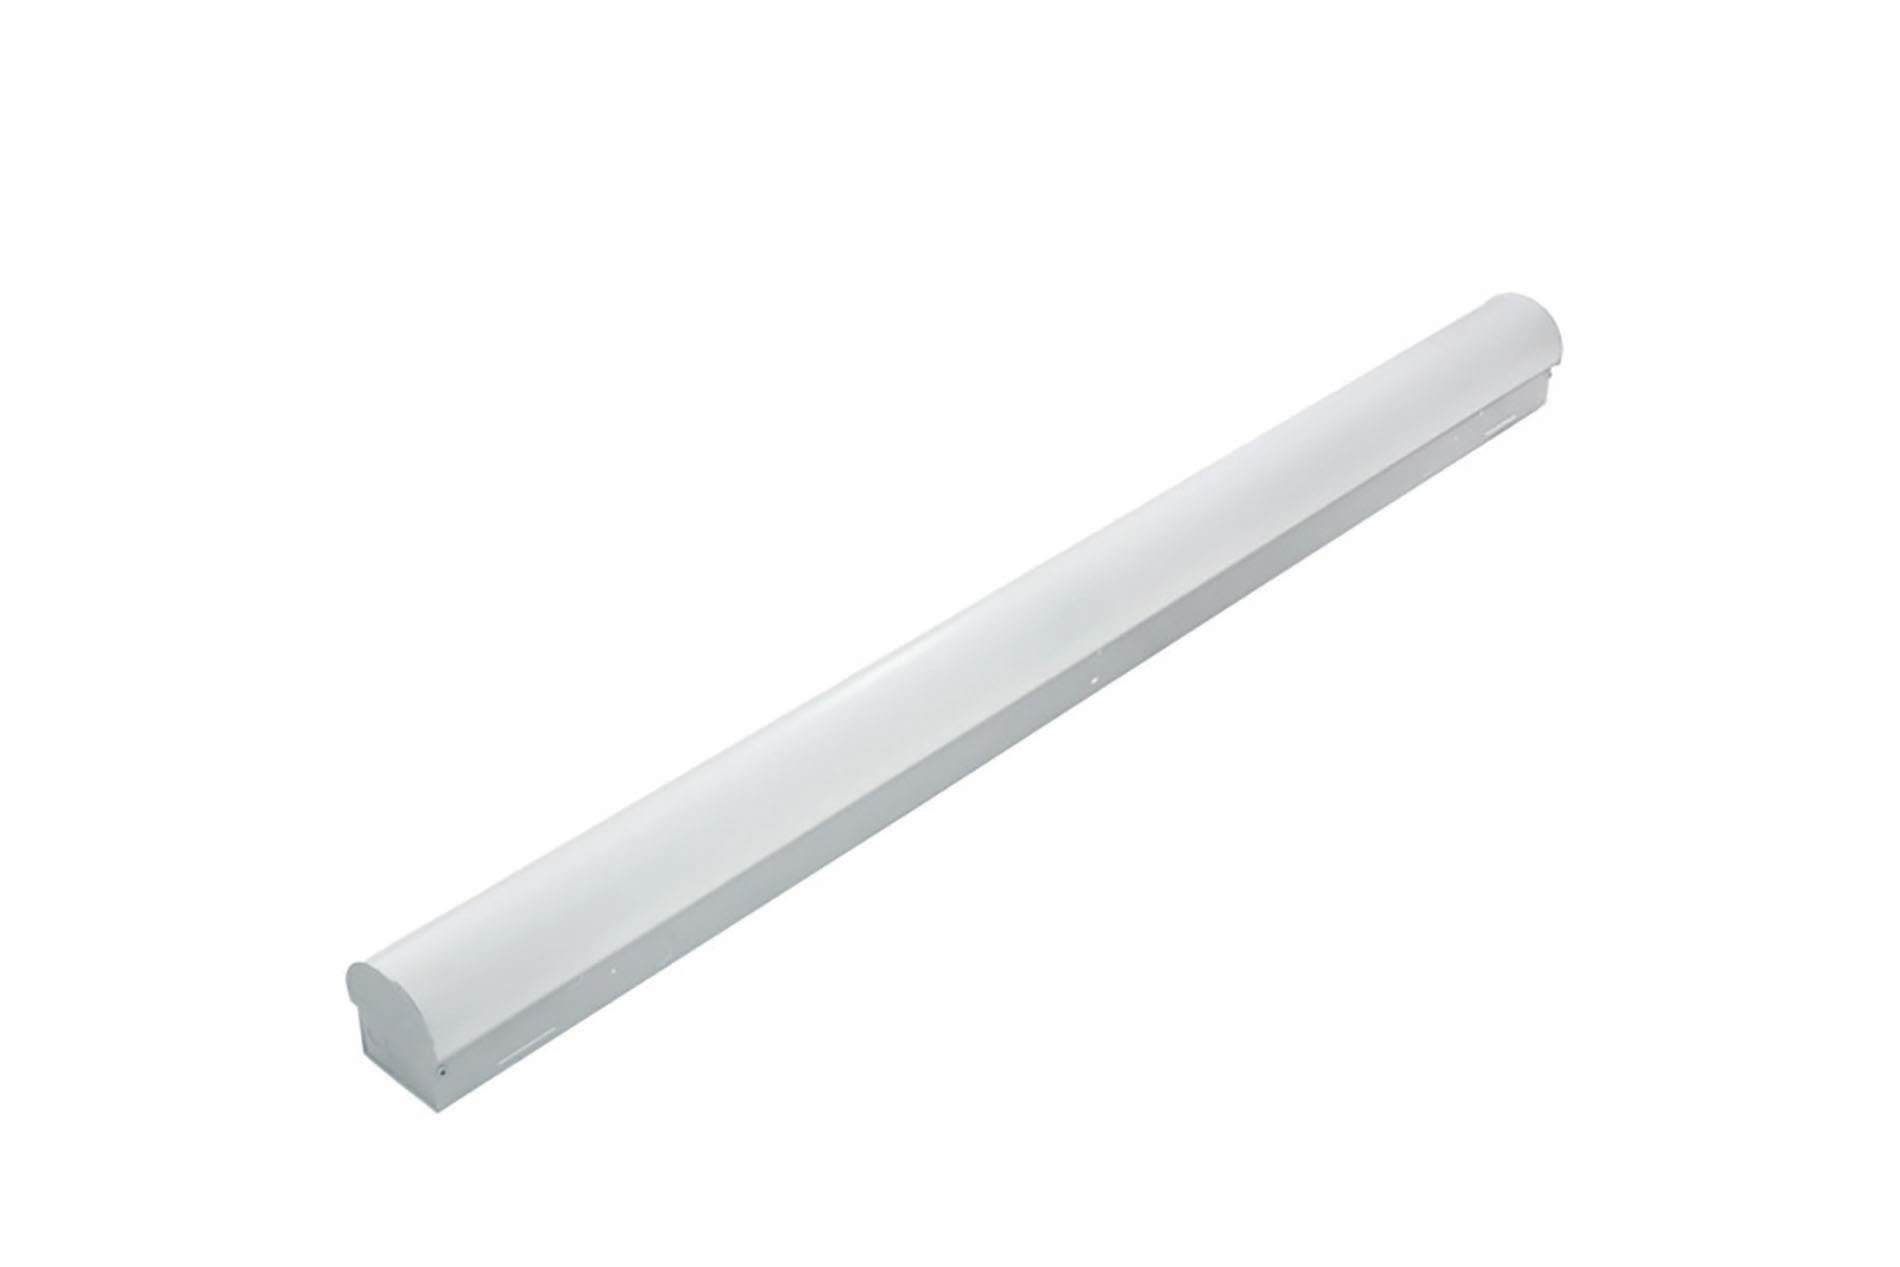 Long white LED strip. Image by EarthTronics.